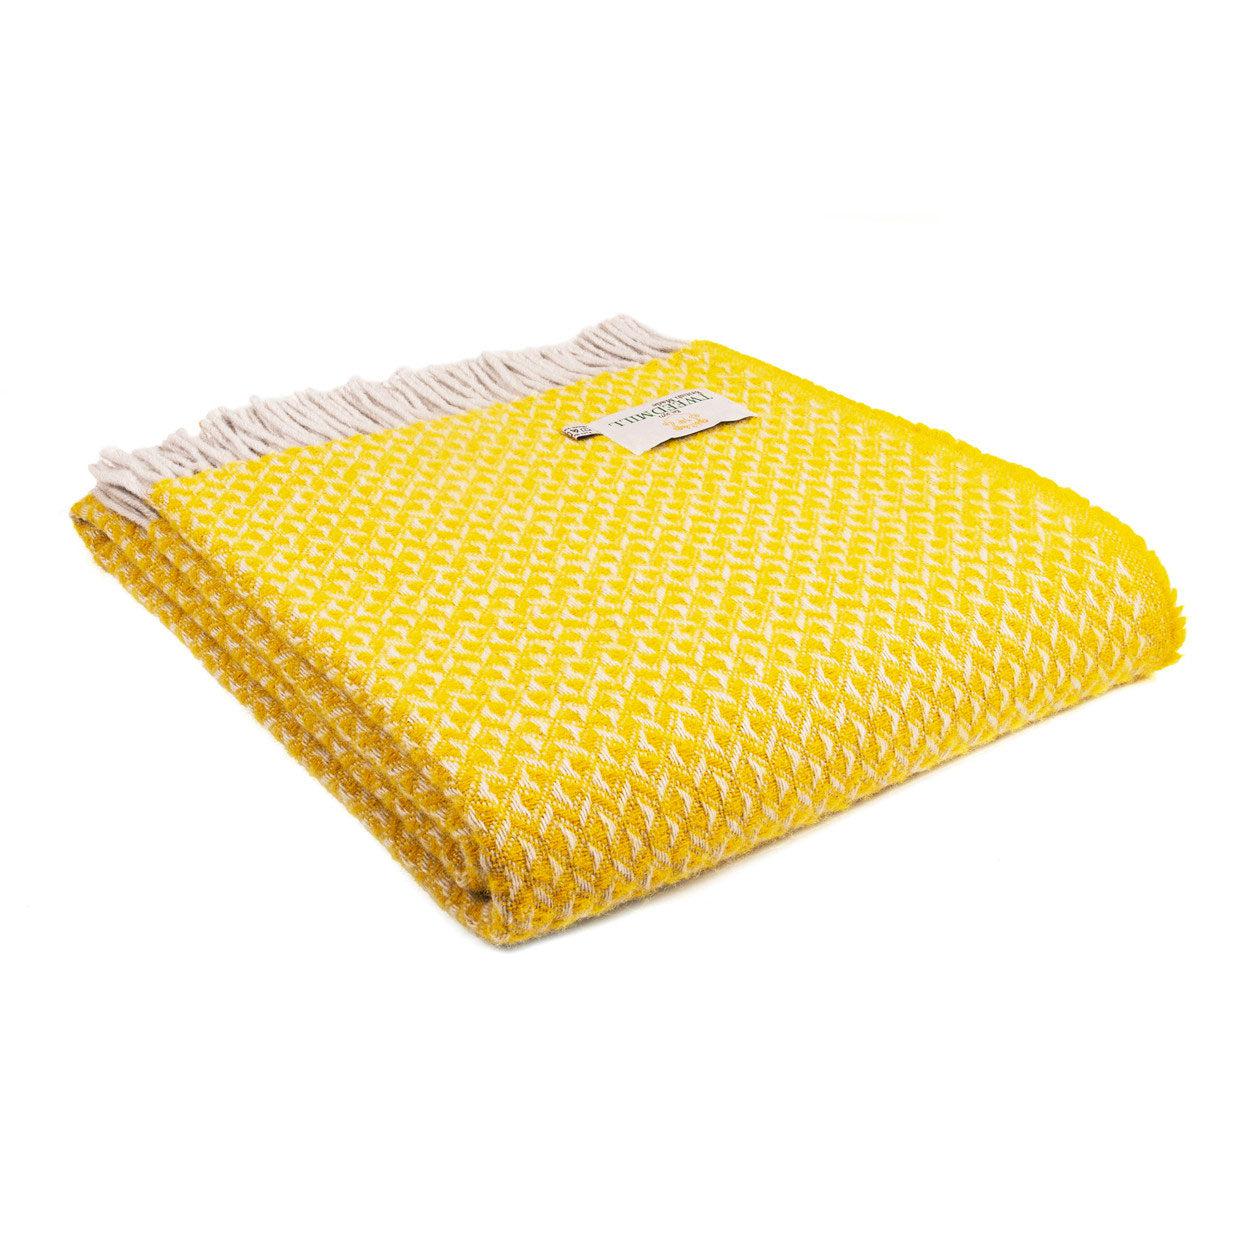 Throw / Blanket - New Wool - Welsh Diamond - Yellow